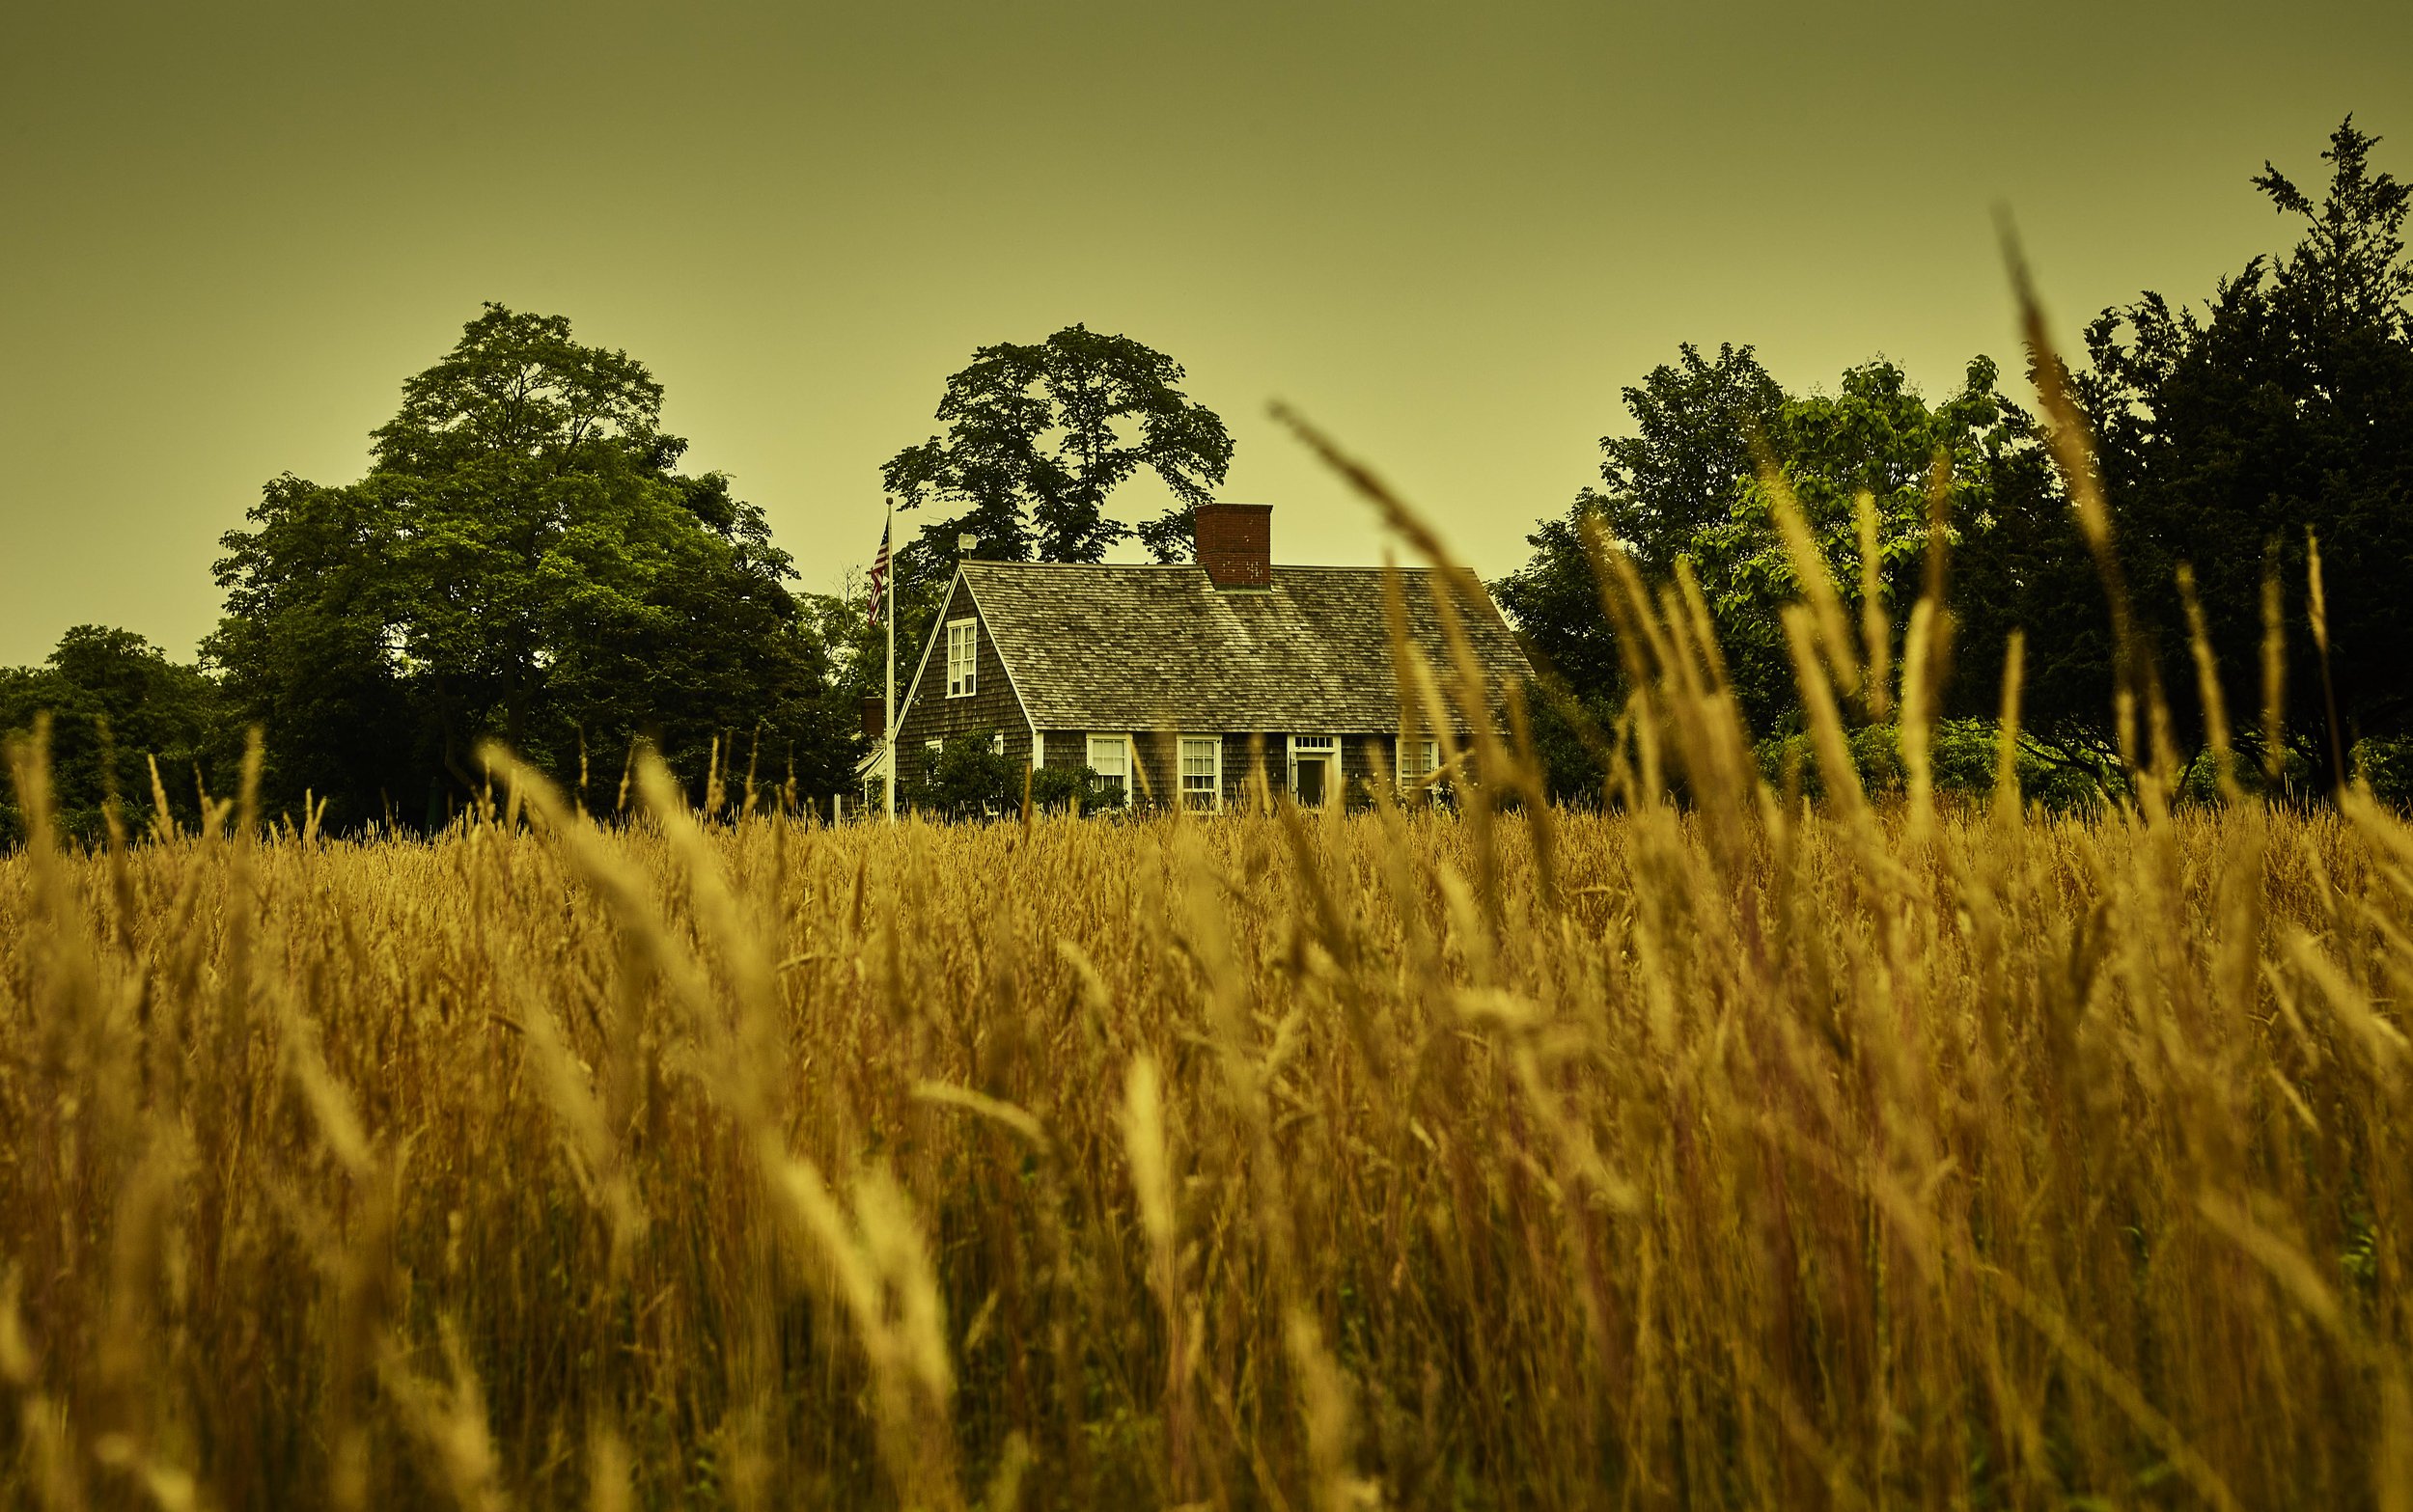 New England house in Grassy Field_1480 copy.jpg